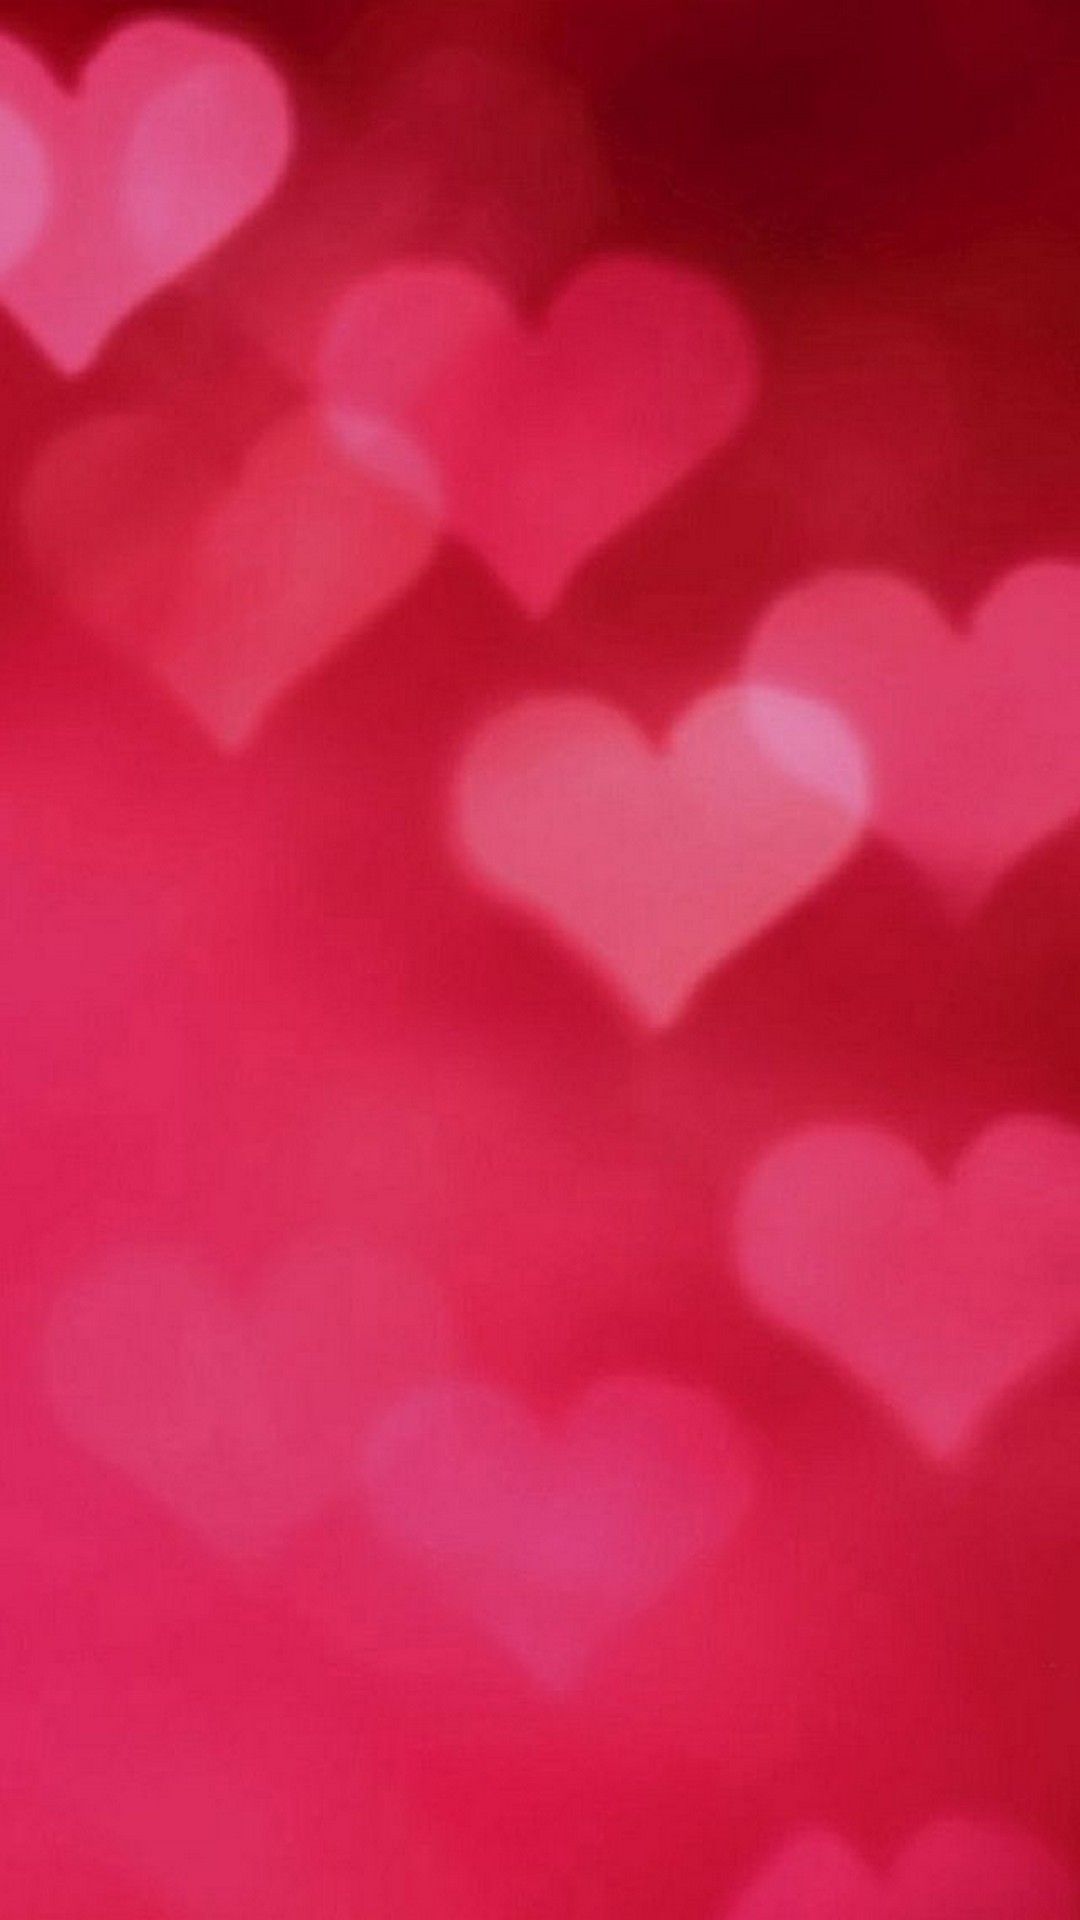 Valentines Day Wallpaper iPhone 6. Best HD Wallpaper. Valentines wallpaper, Valentines wallpaper iphone, iPhone wallpaper vintage